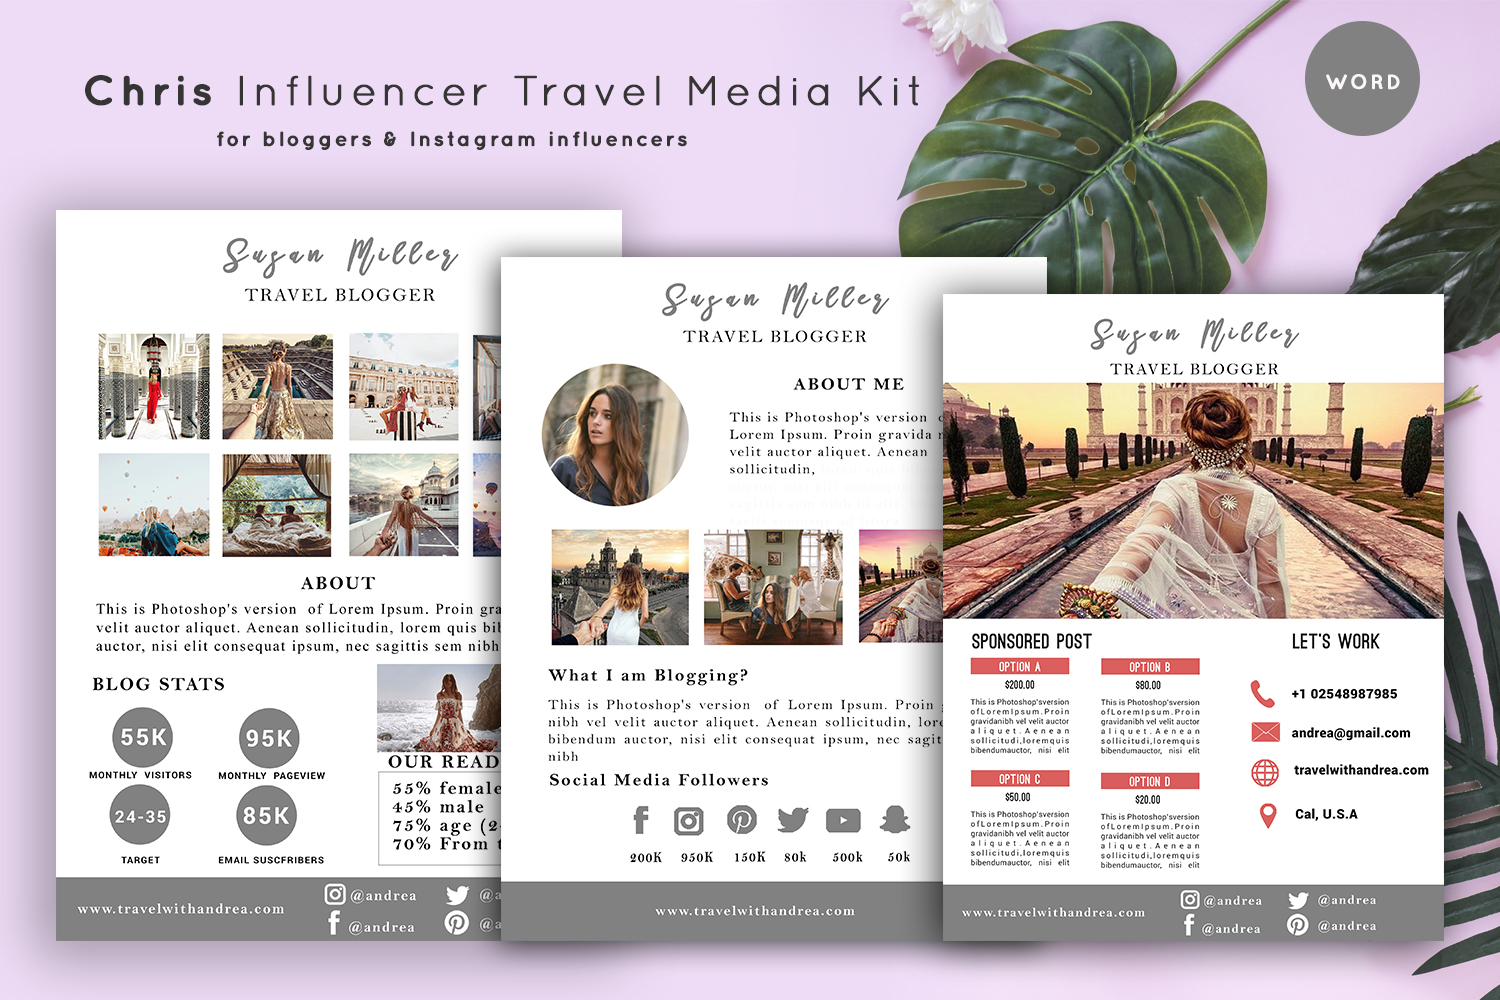 the australian travel and luxury media kit